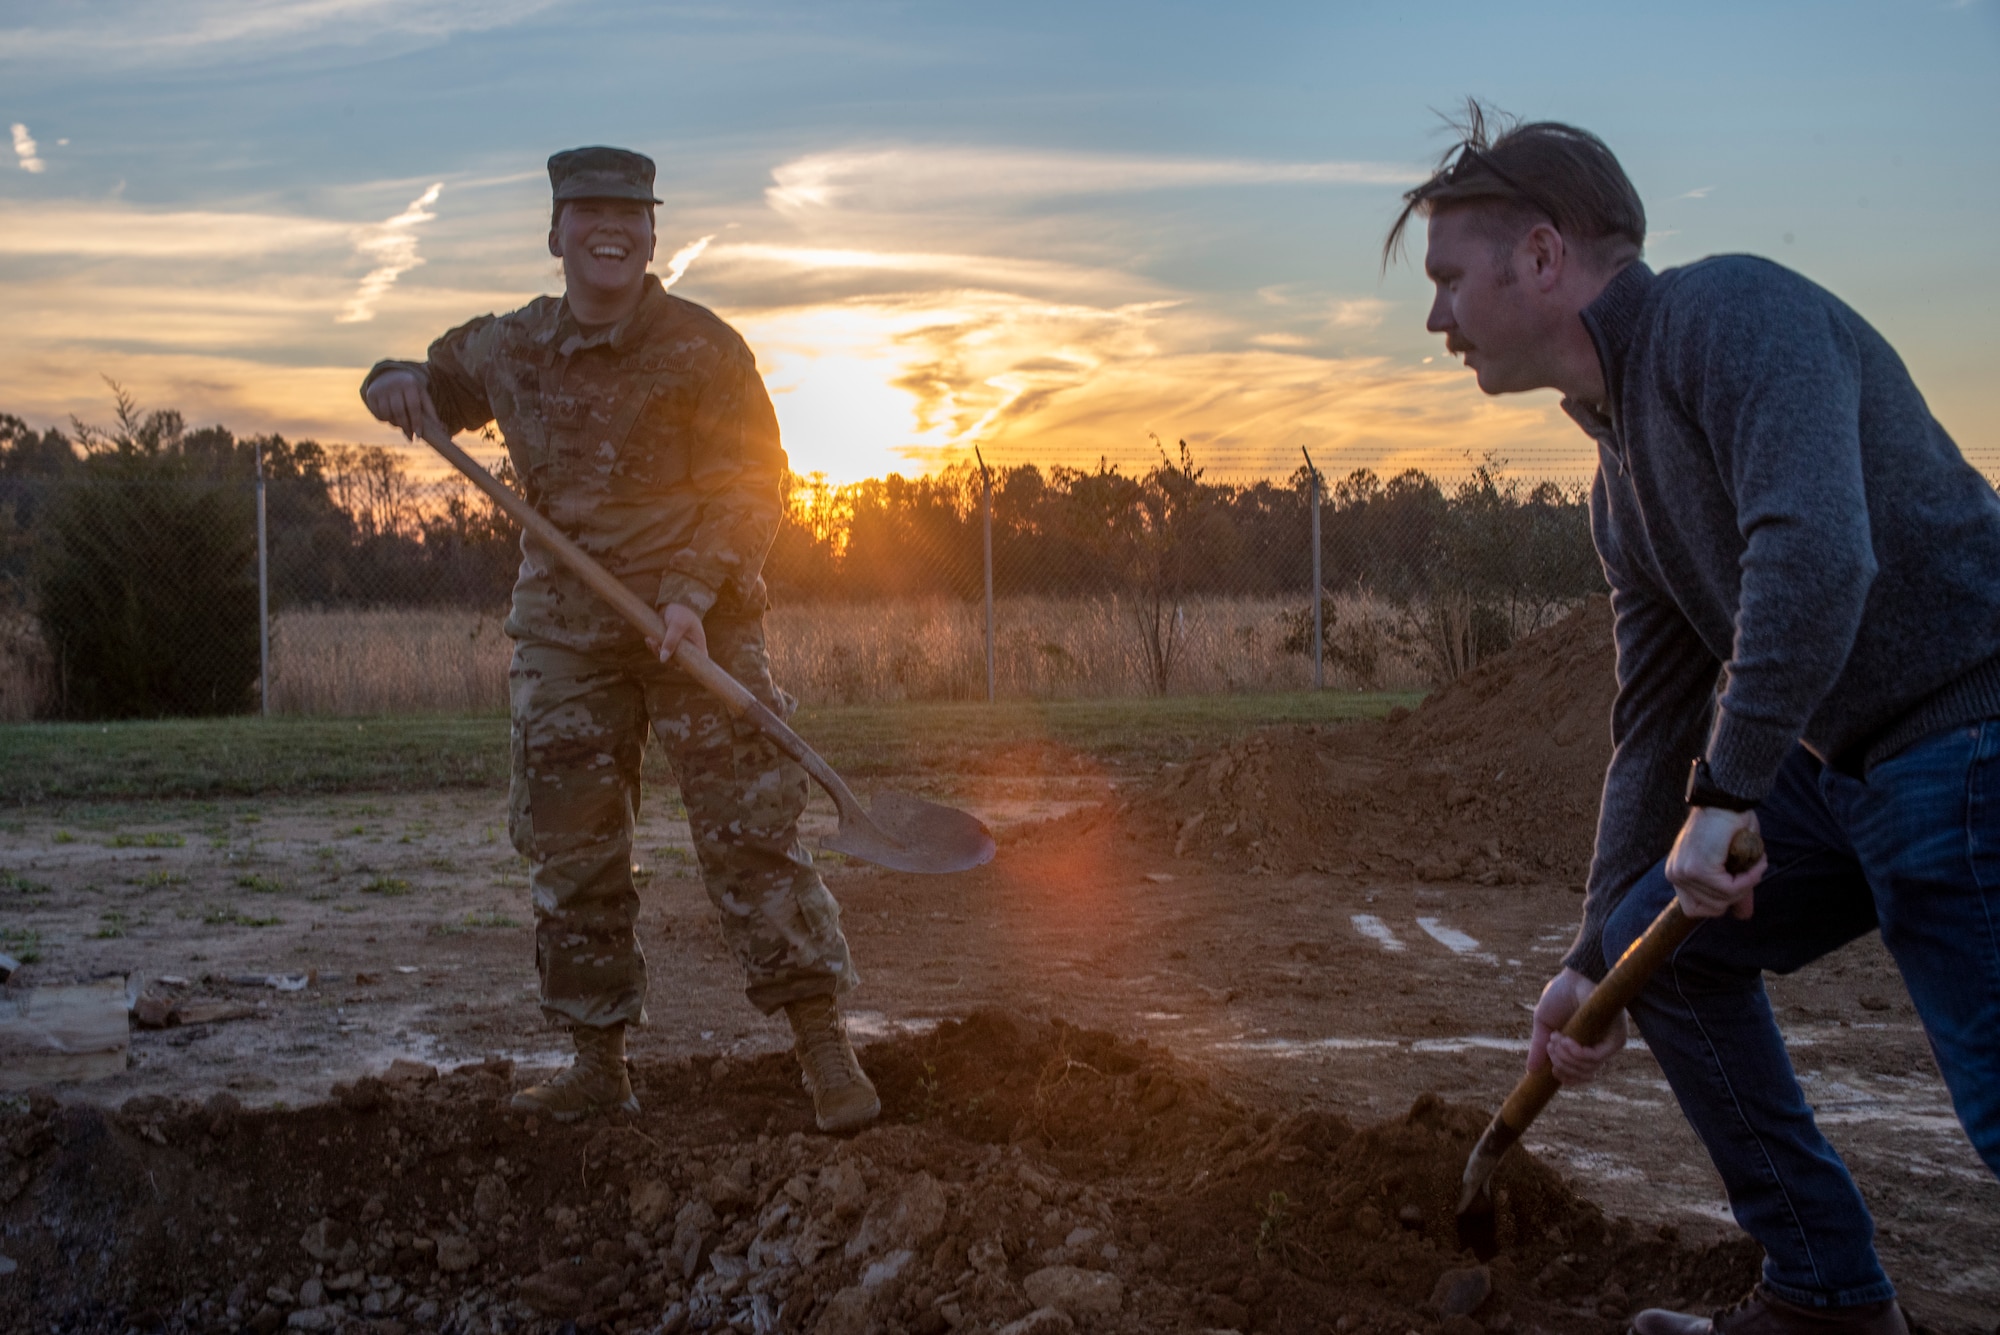 A woman in uniform helps a man in civilian attire shovel.